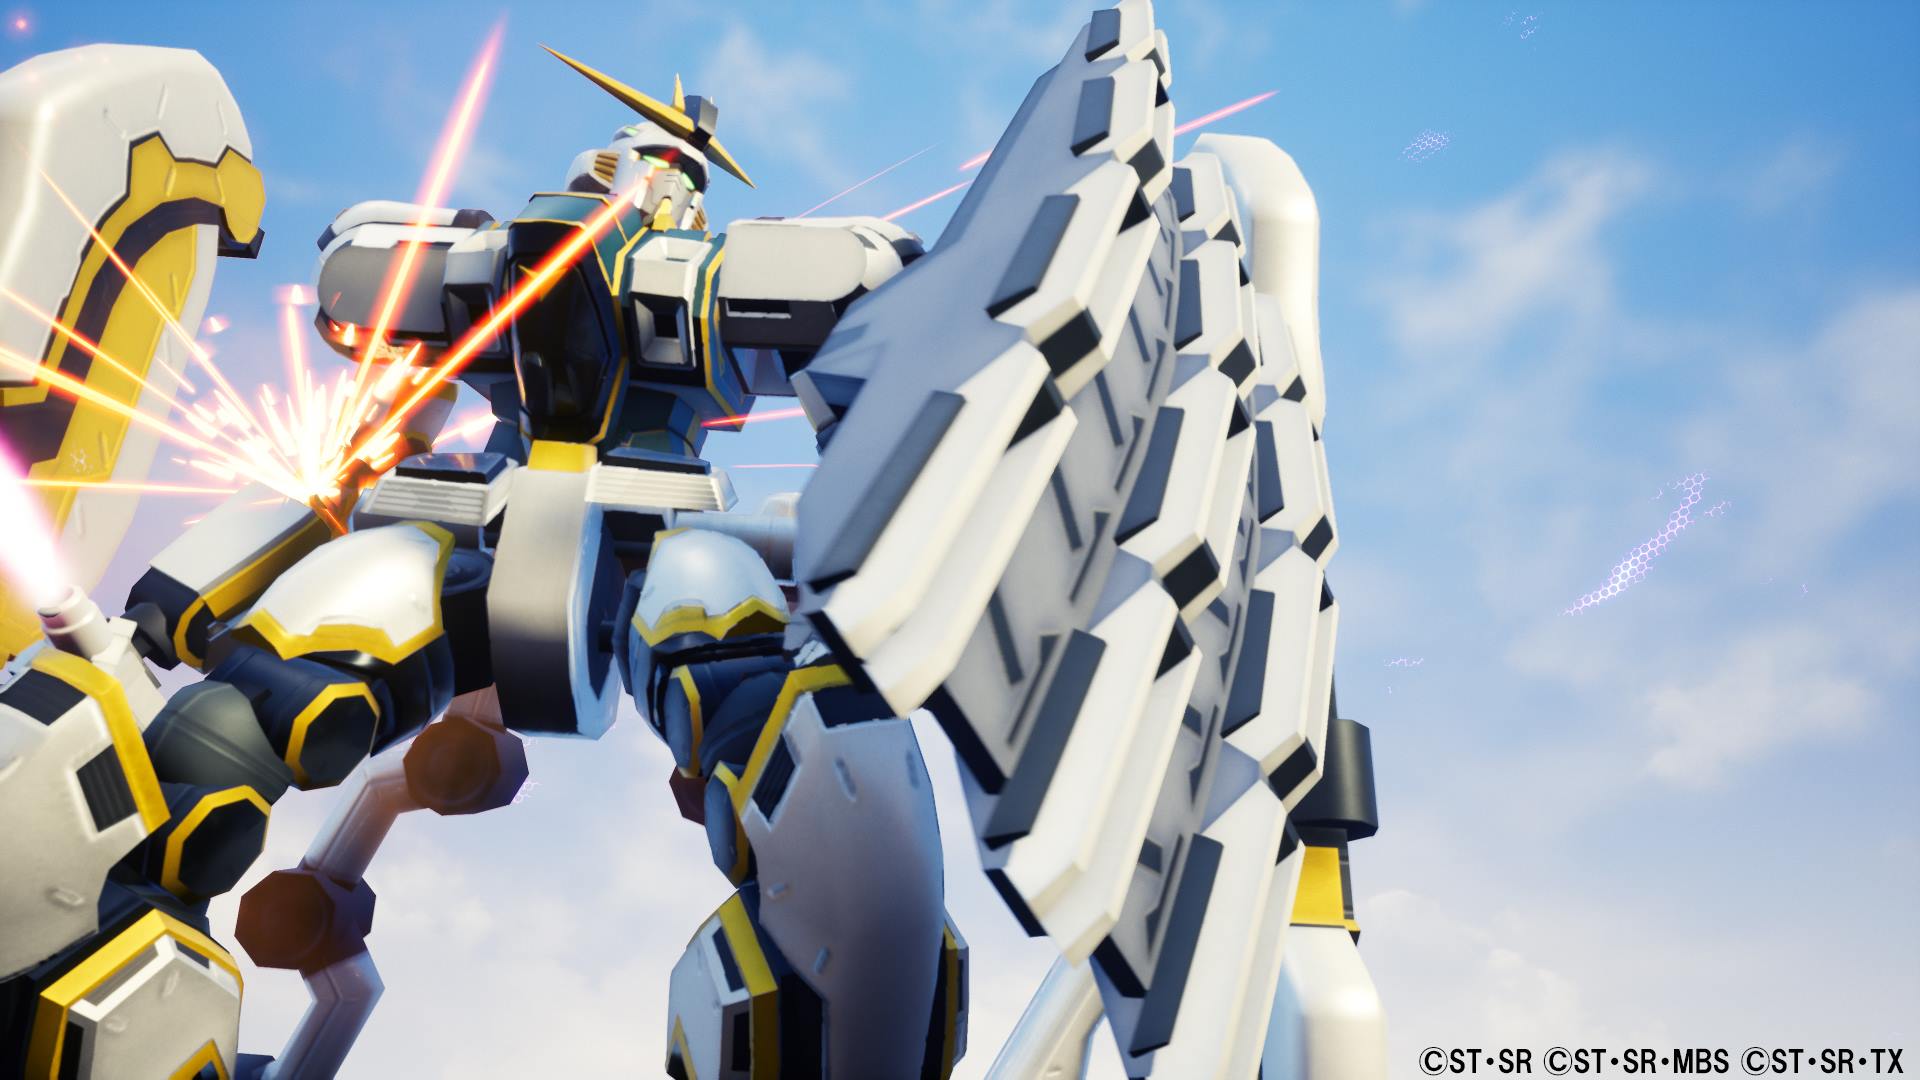 New Gundam Breaker เวอร์ชั่น PC เลื่อนออกวางจำหน่ายช่วงฤดูร้อนนี้เเทน